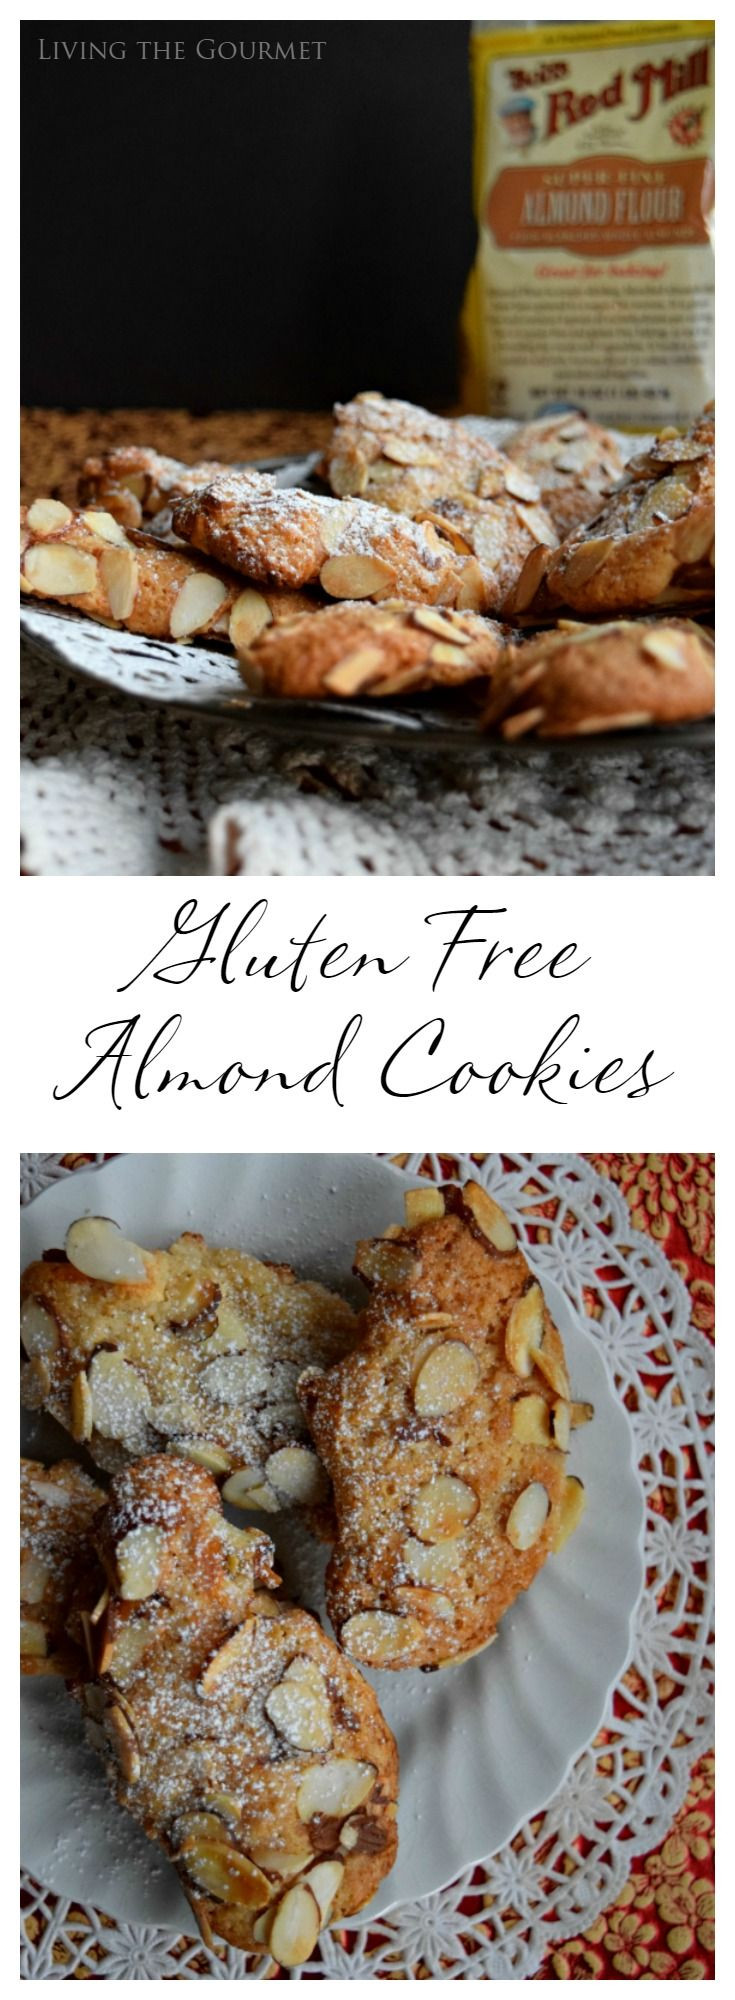 Gluten Free Gourmet Recipes
 Gluten Free Almond Cookies Recipe